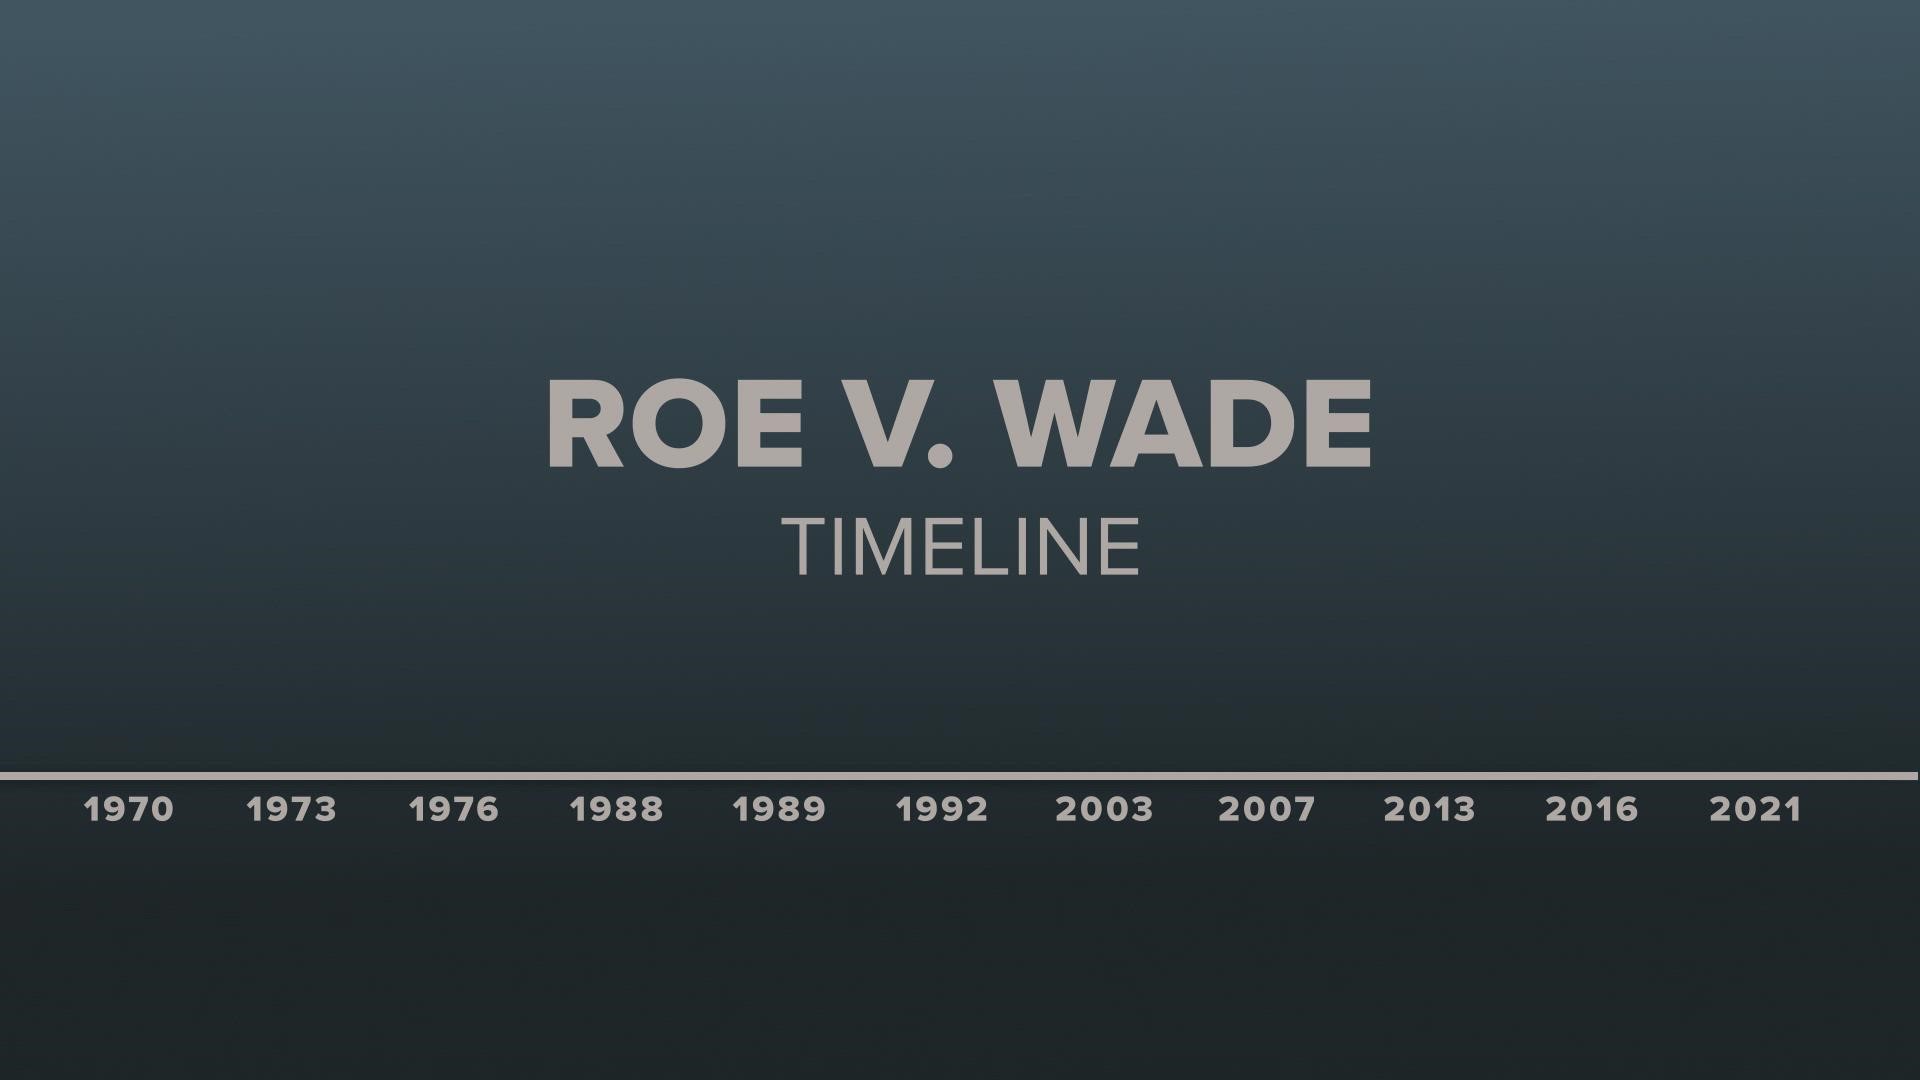 The Supreme Court overturned Roe v Wade in a 6-3 ruling.